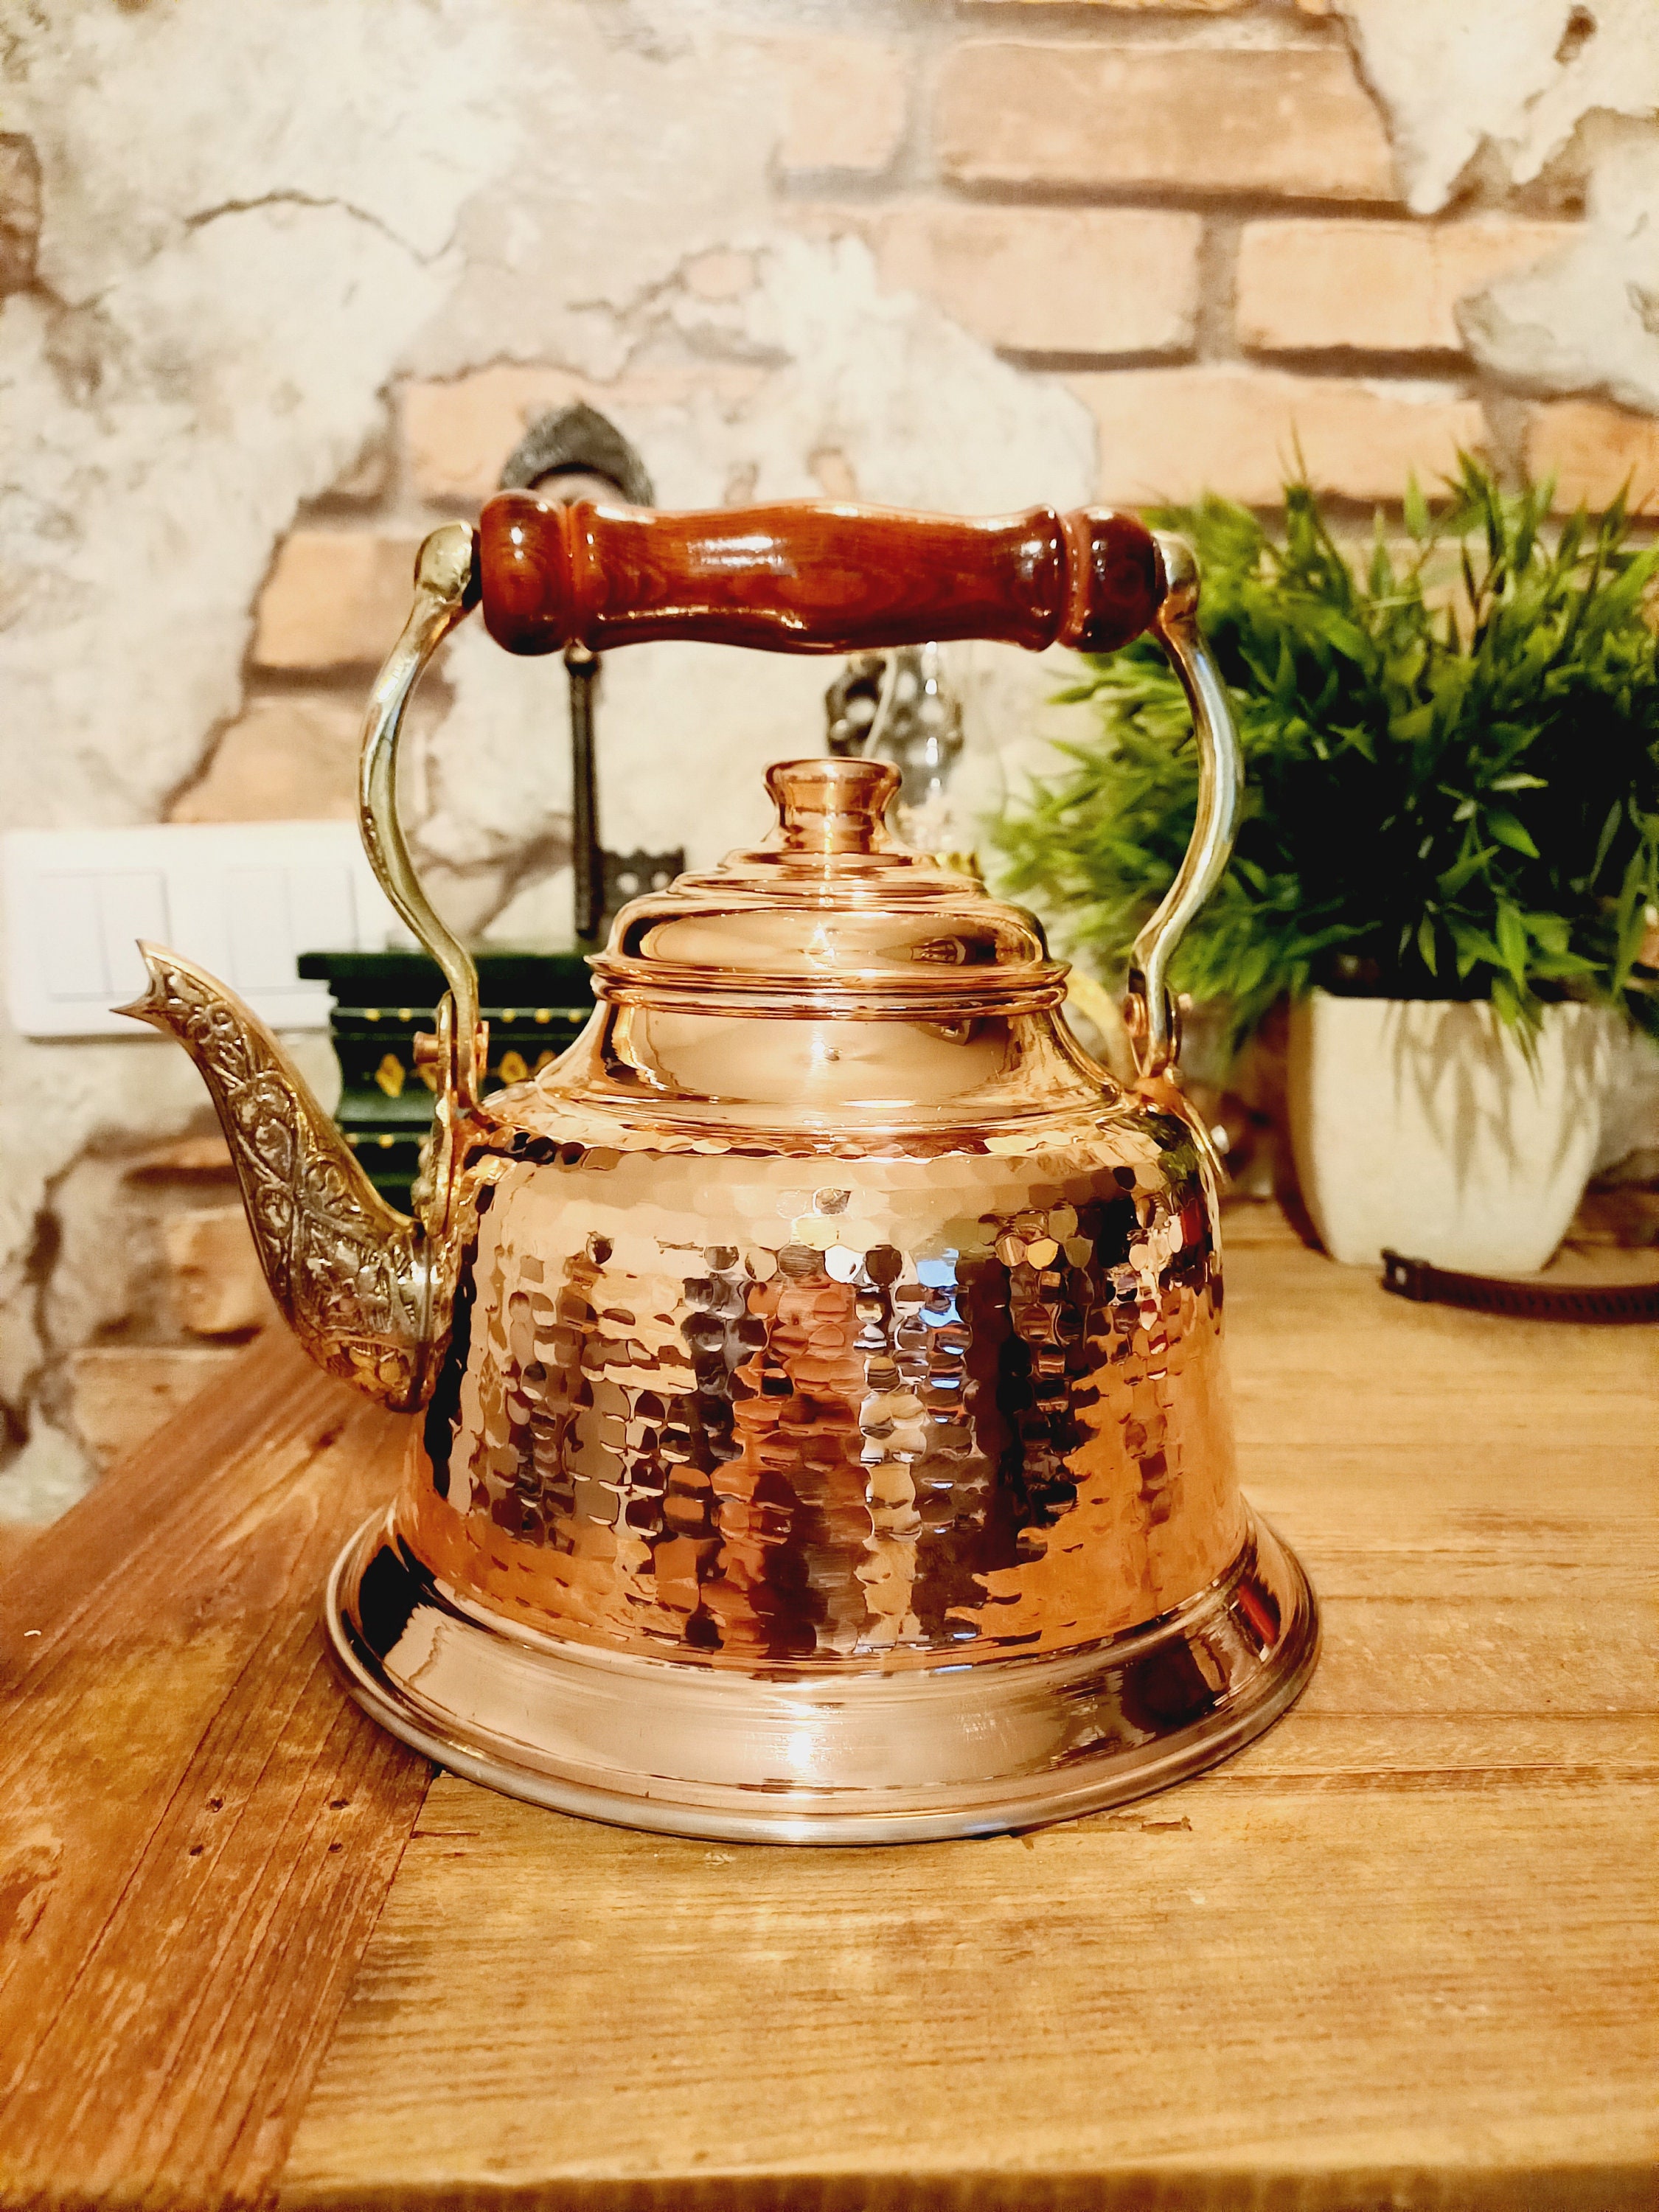 Traditional Electric Turkish Tea Pot With Tea Pot And Kettle_Huining  International